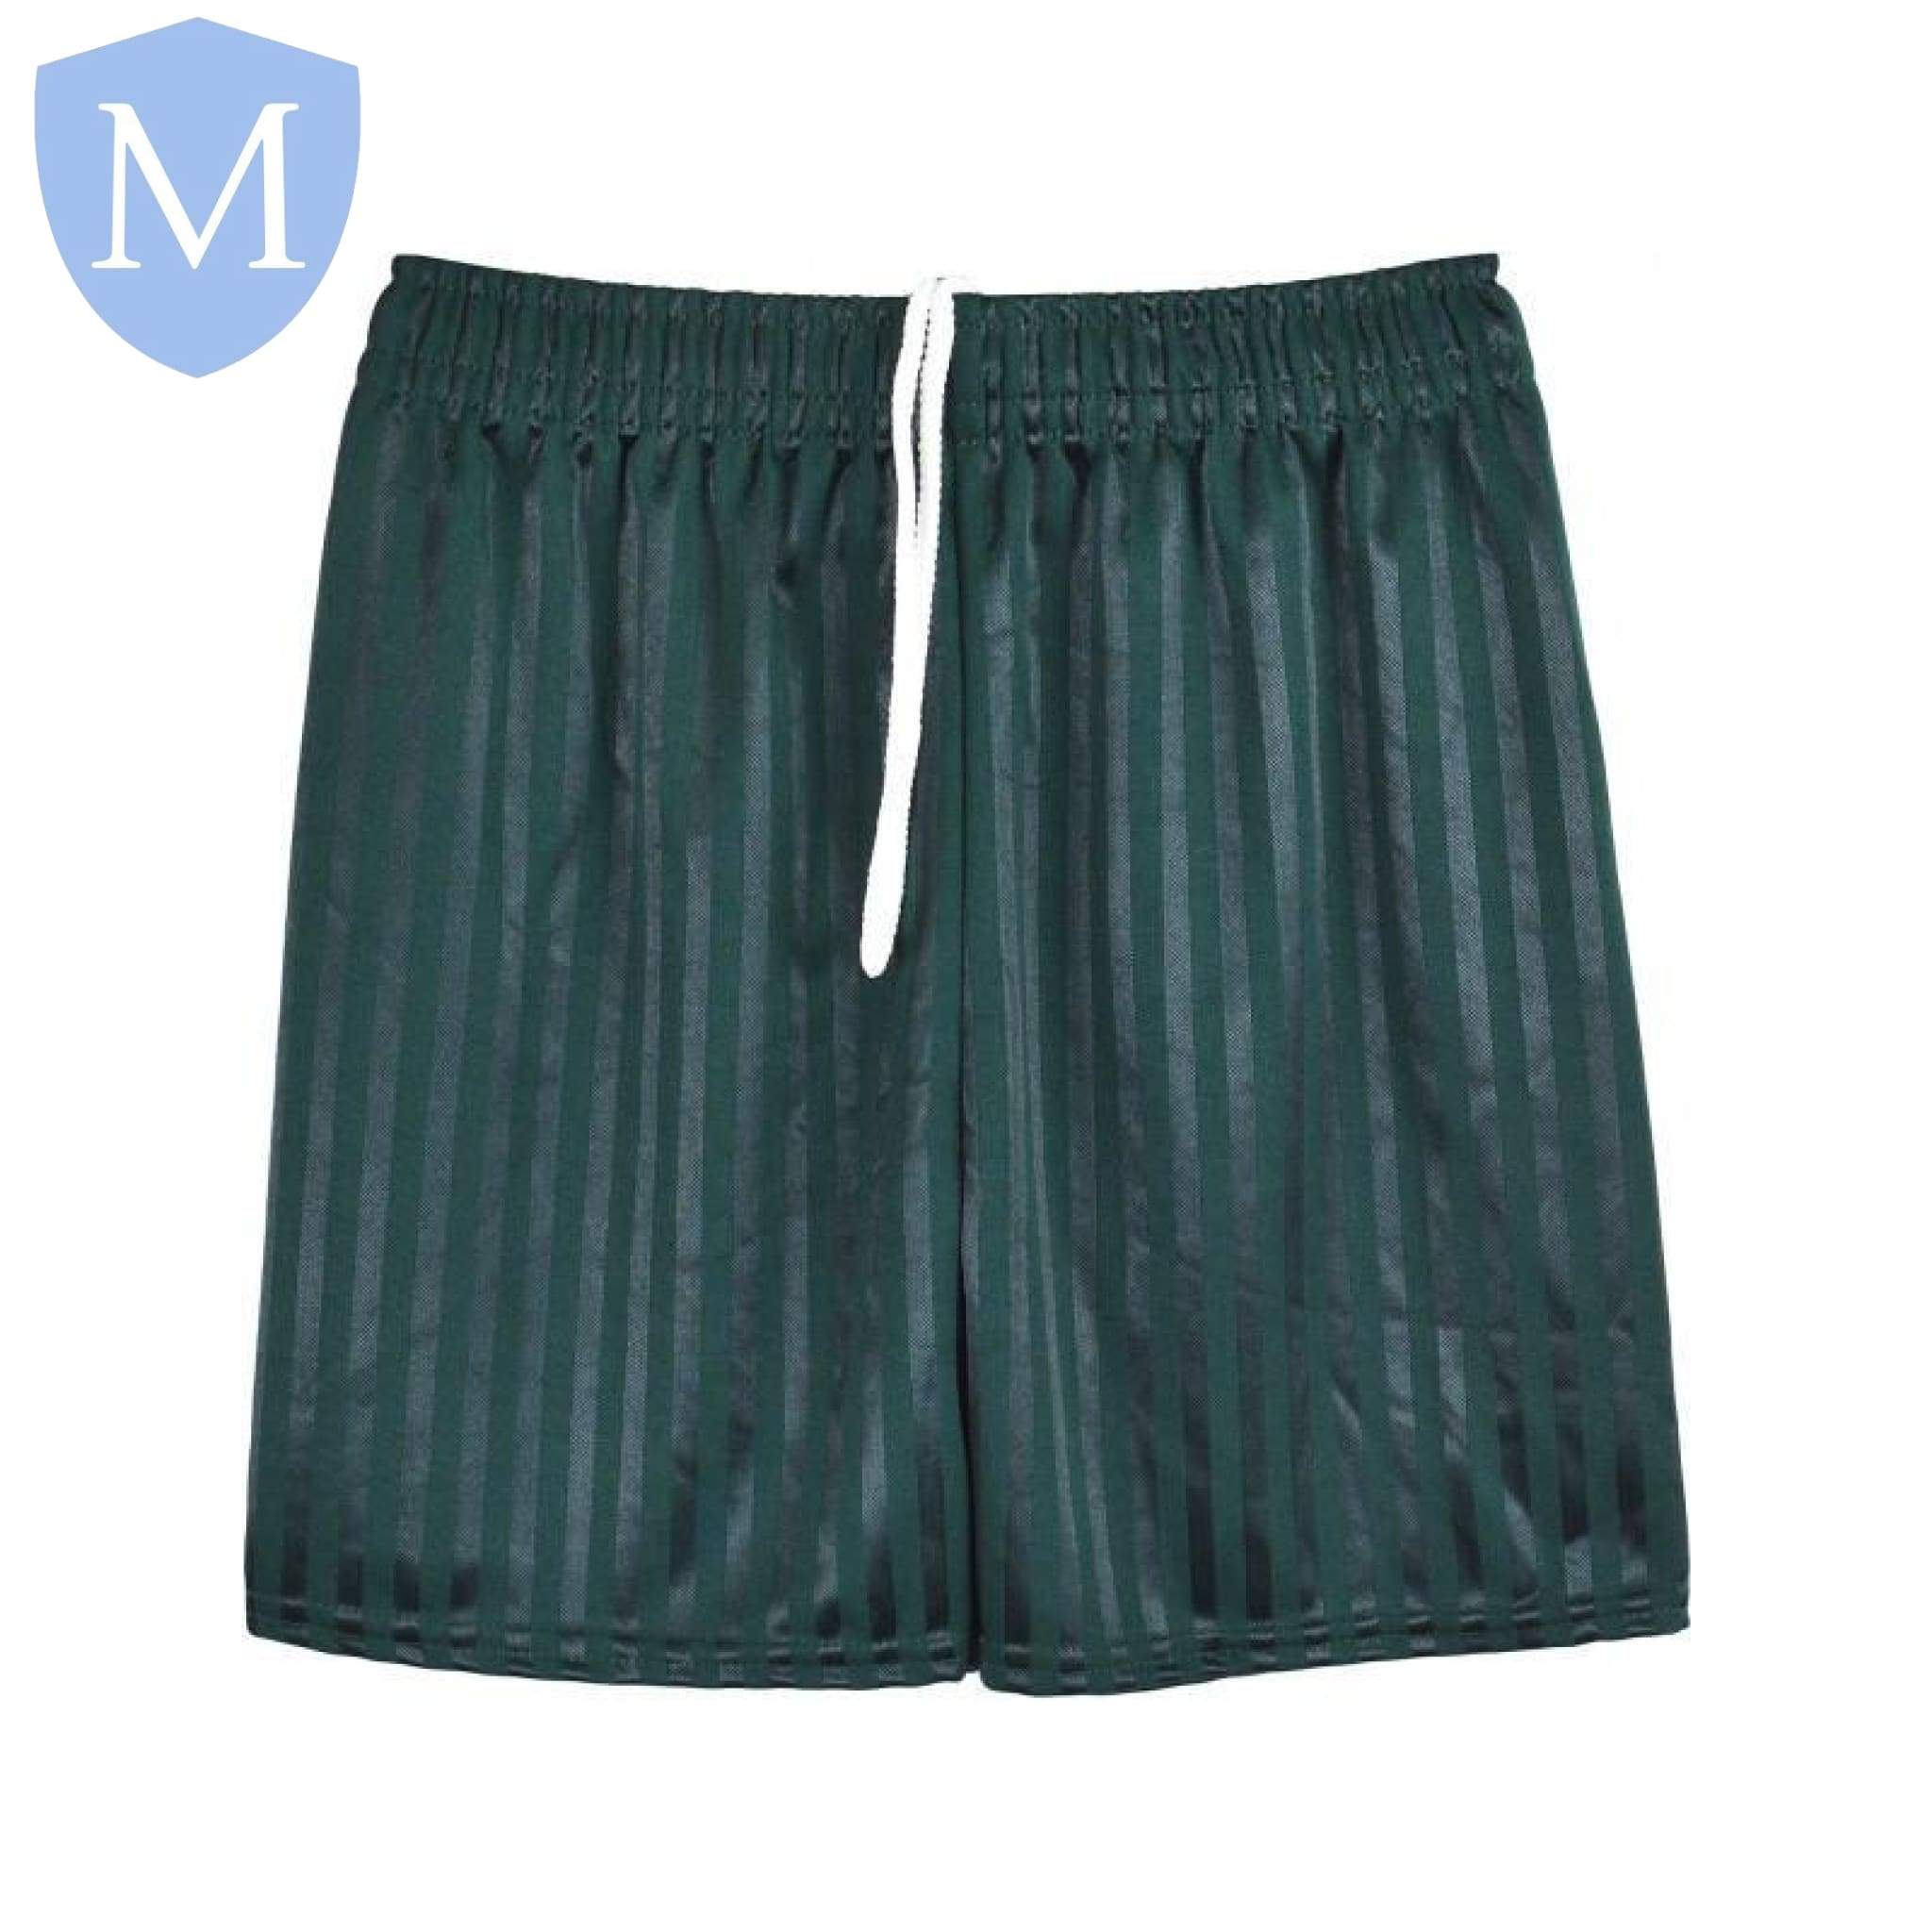 Plain Sports Shadow Shorts - Emerald Green Size 11-12,Size 2-3,Size 2XL,Size 3-4,Size 4-5,Size 5-6,Size 7-8,Size 9-10,Size Large,Size Medium,Size Small,Size XL